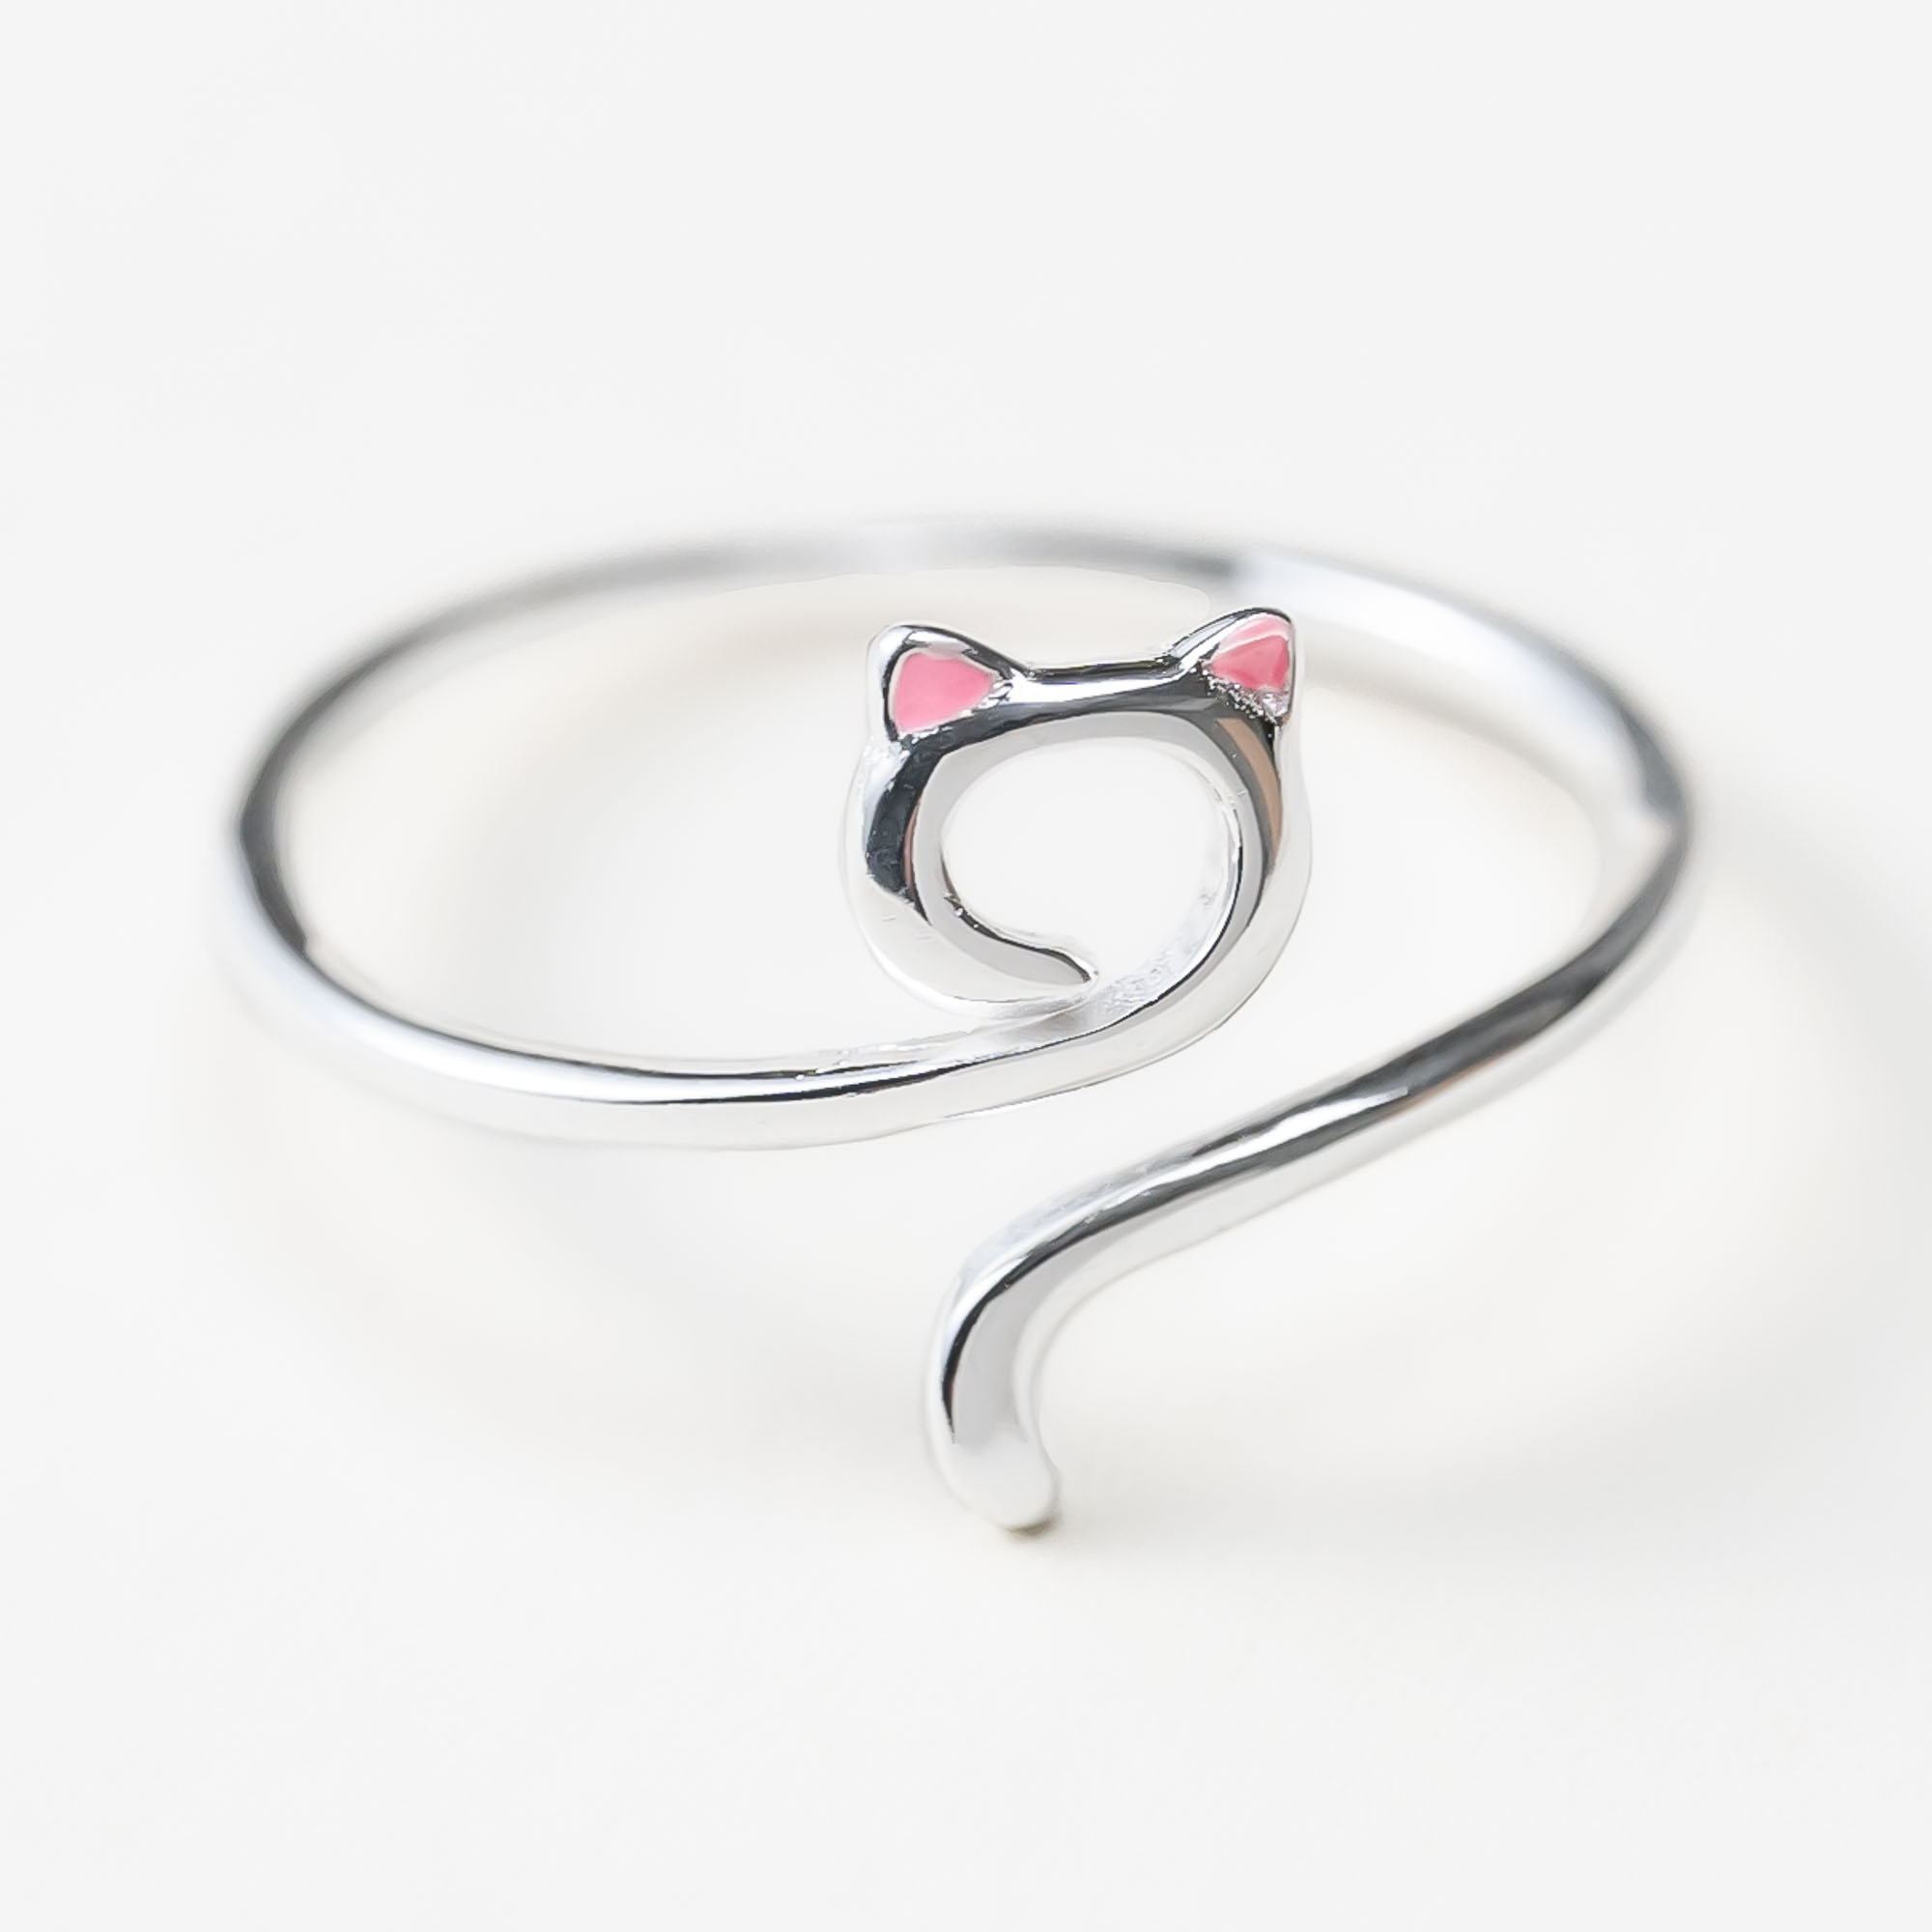 niezen stormloop Koken Gorgeous Wrap Around Your Finger Cat Ring - Sterling Silver ❤️ -  iHeartCats.com